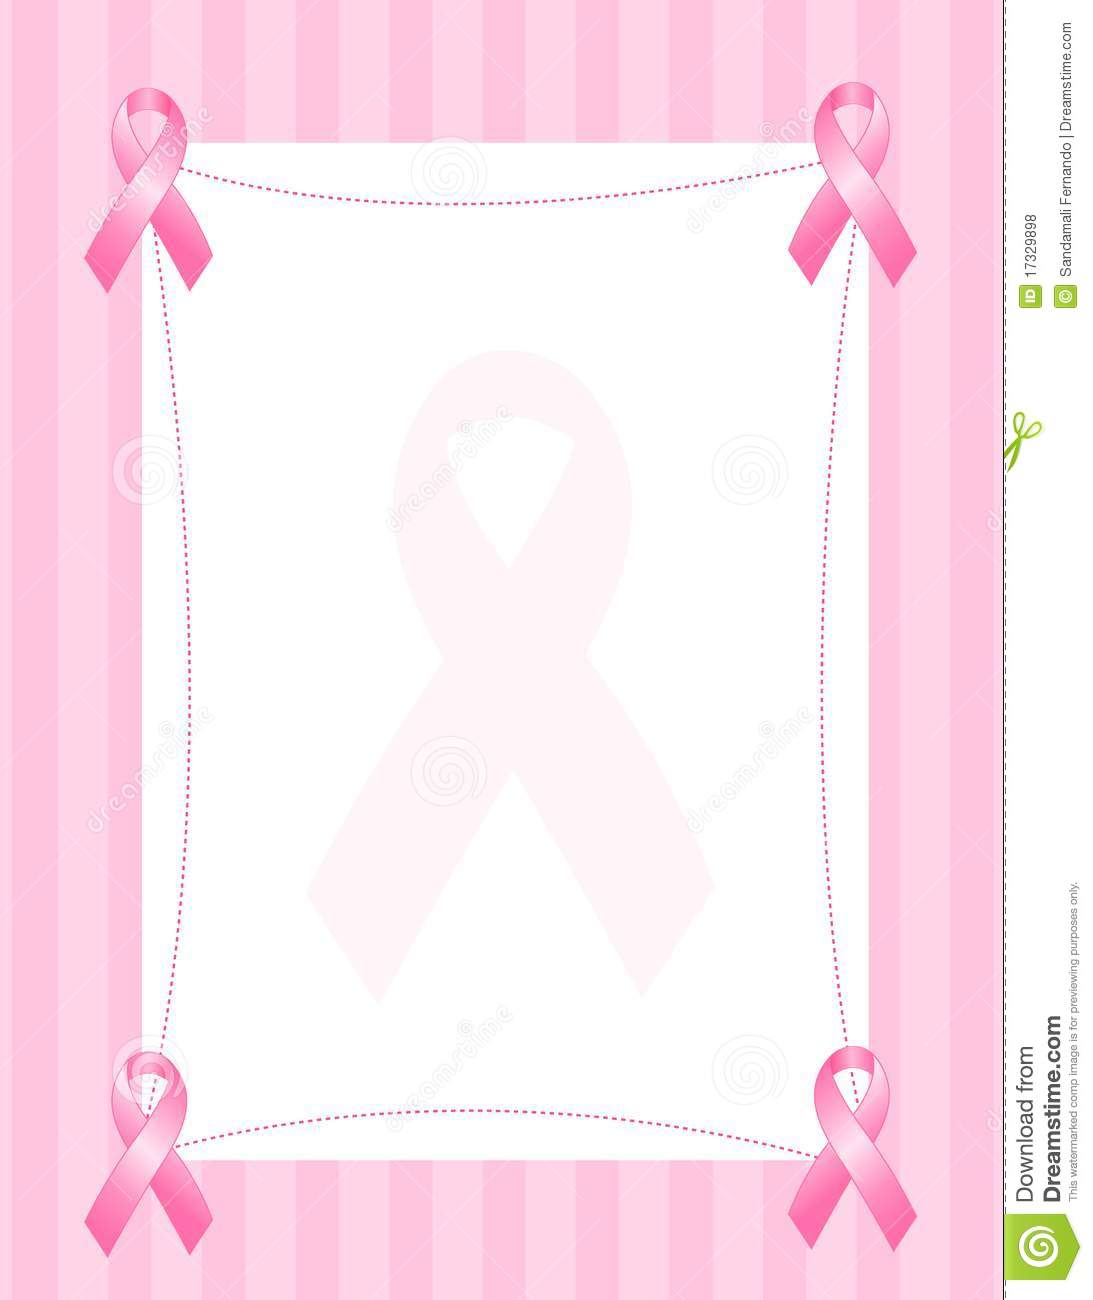     Cancer Awareness Ribbons Background   Border  Cute Pink Ribbons Frame